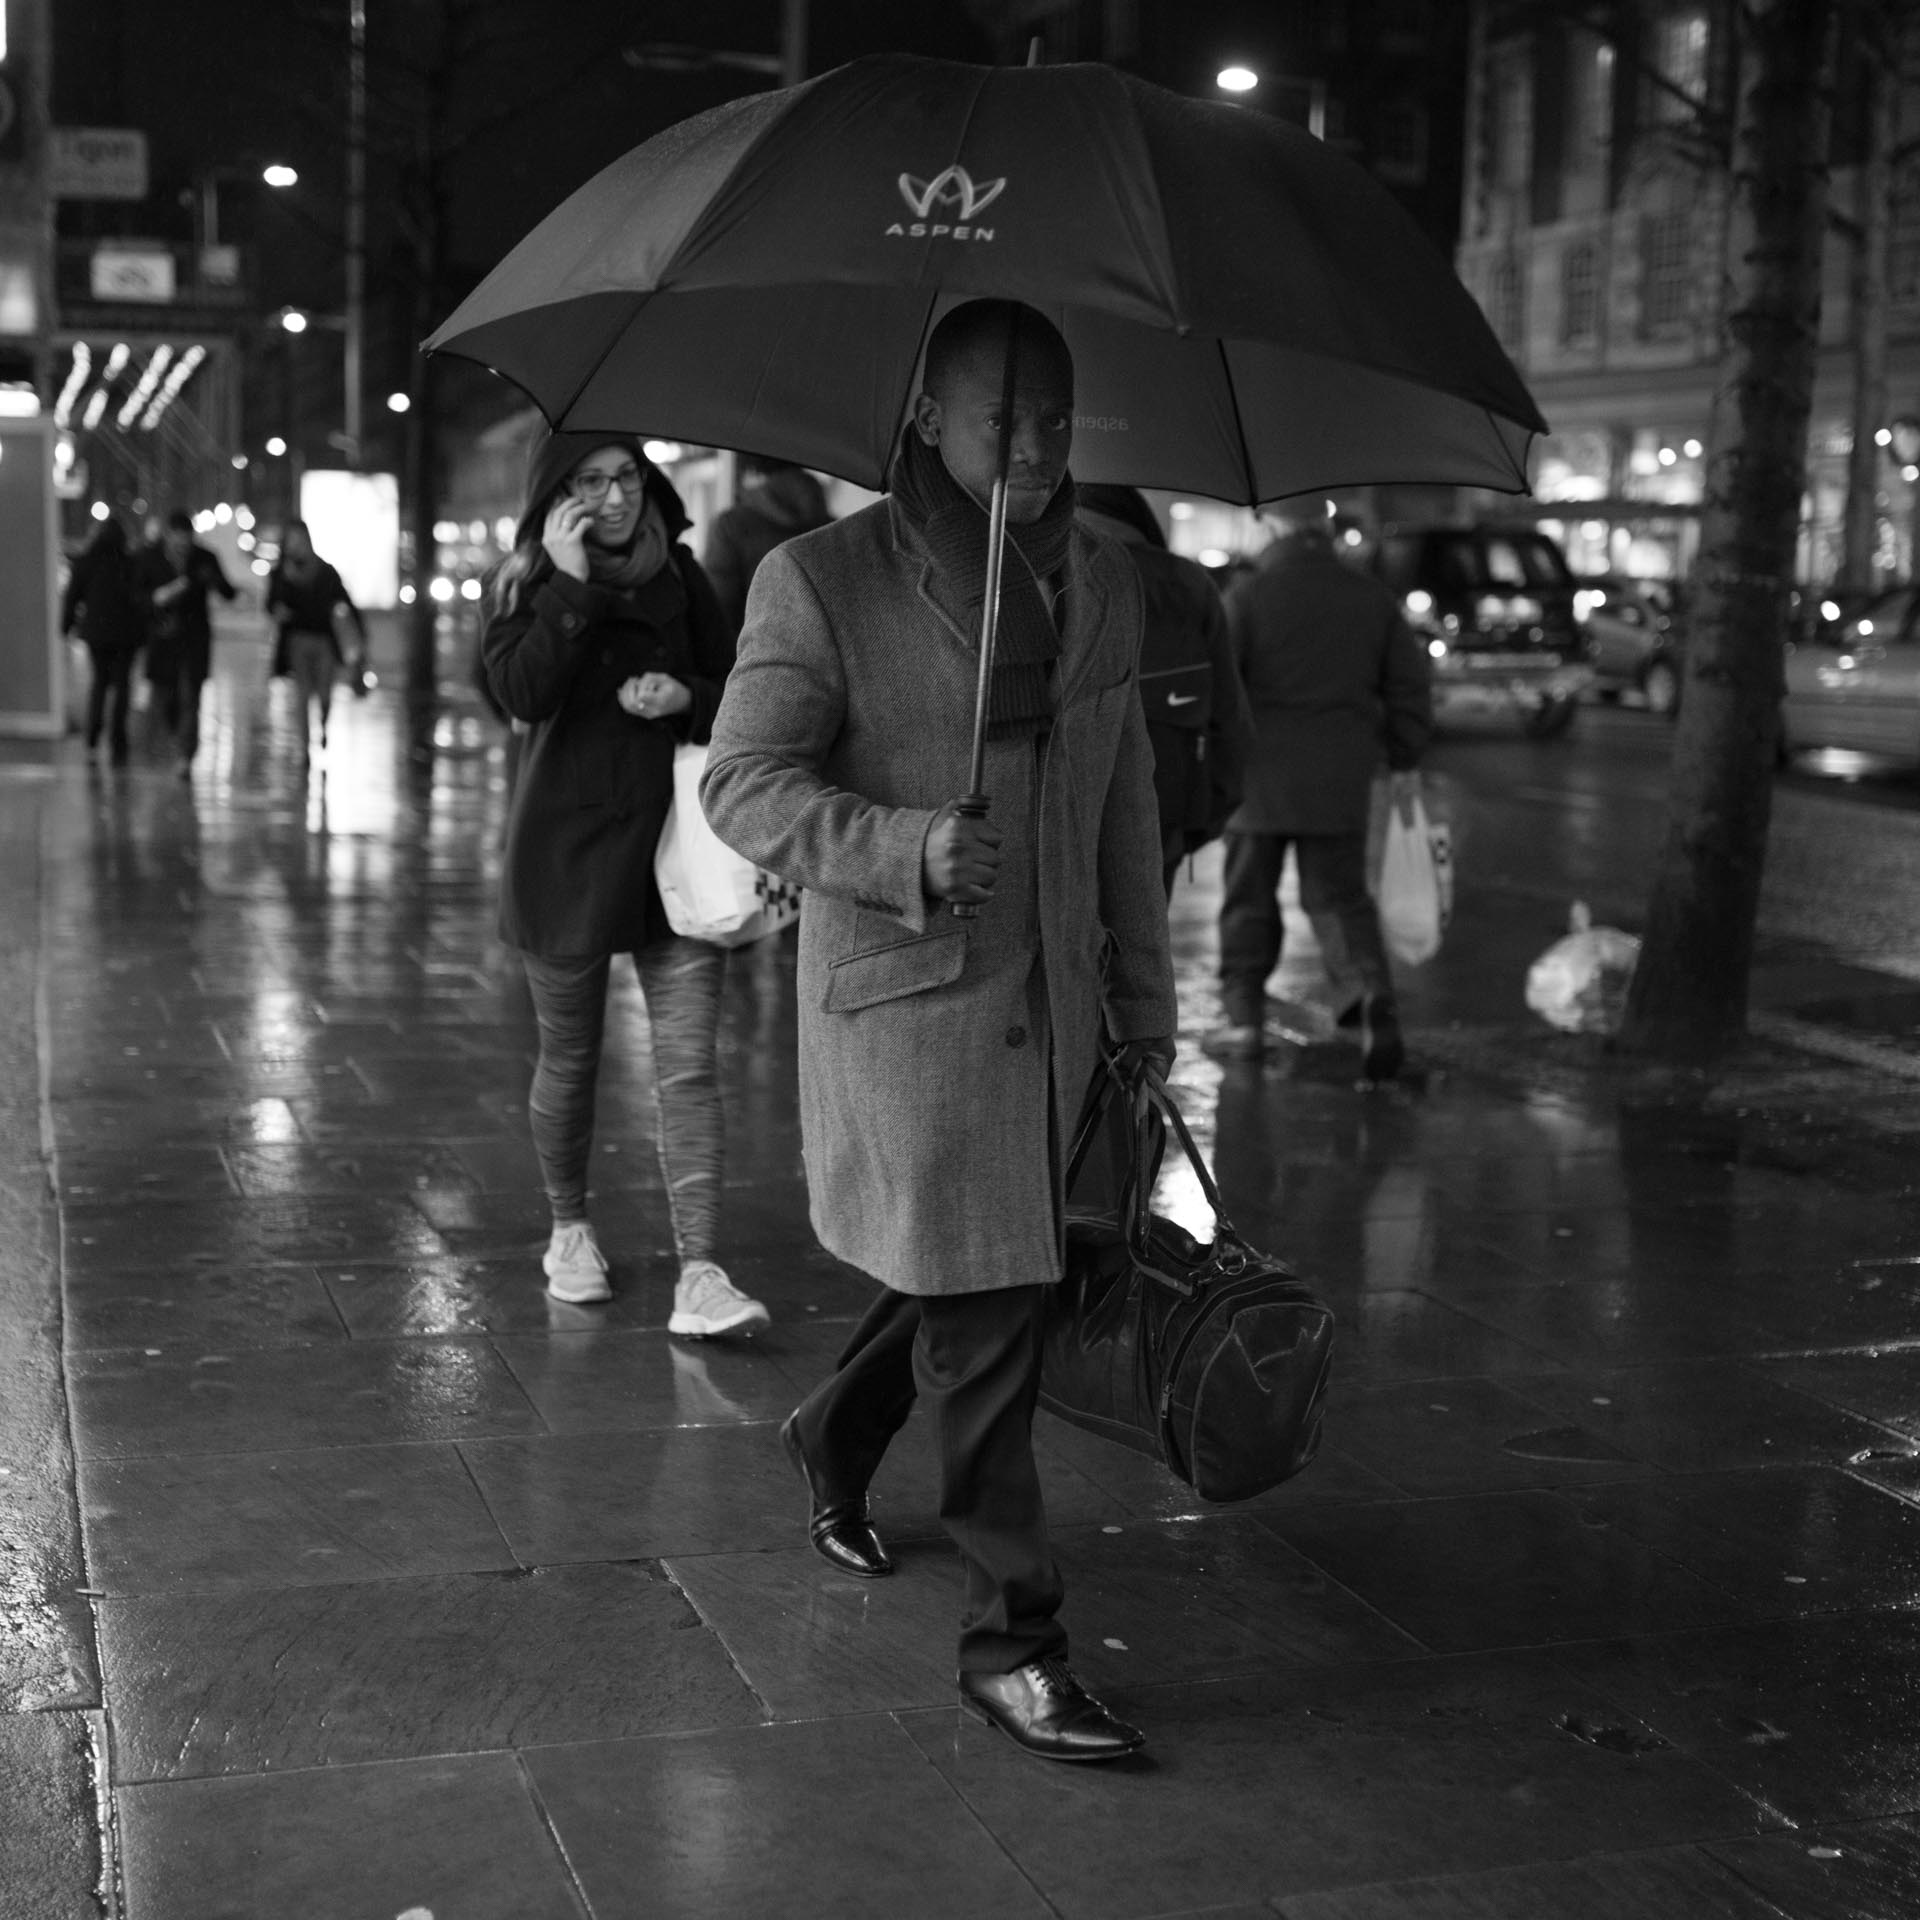 Umbrella & rain, portrait in rain, streetphotography